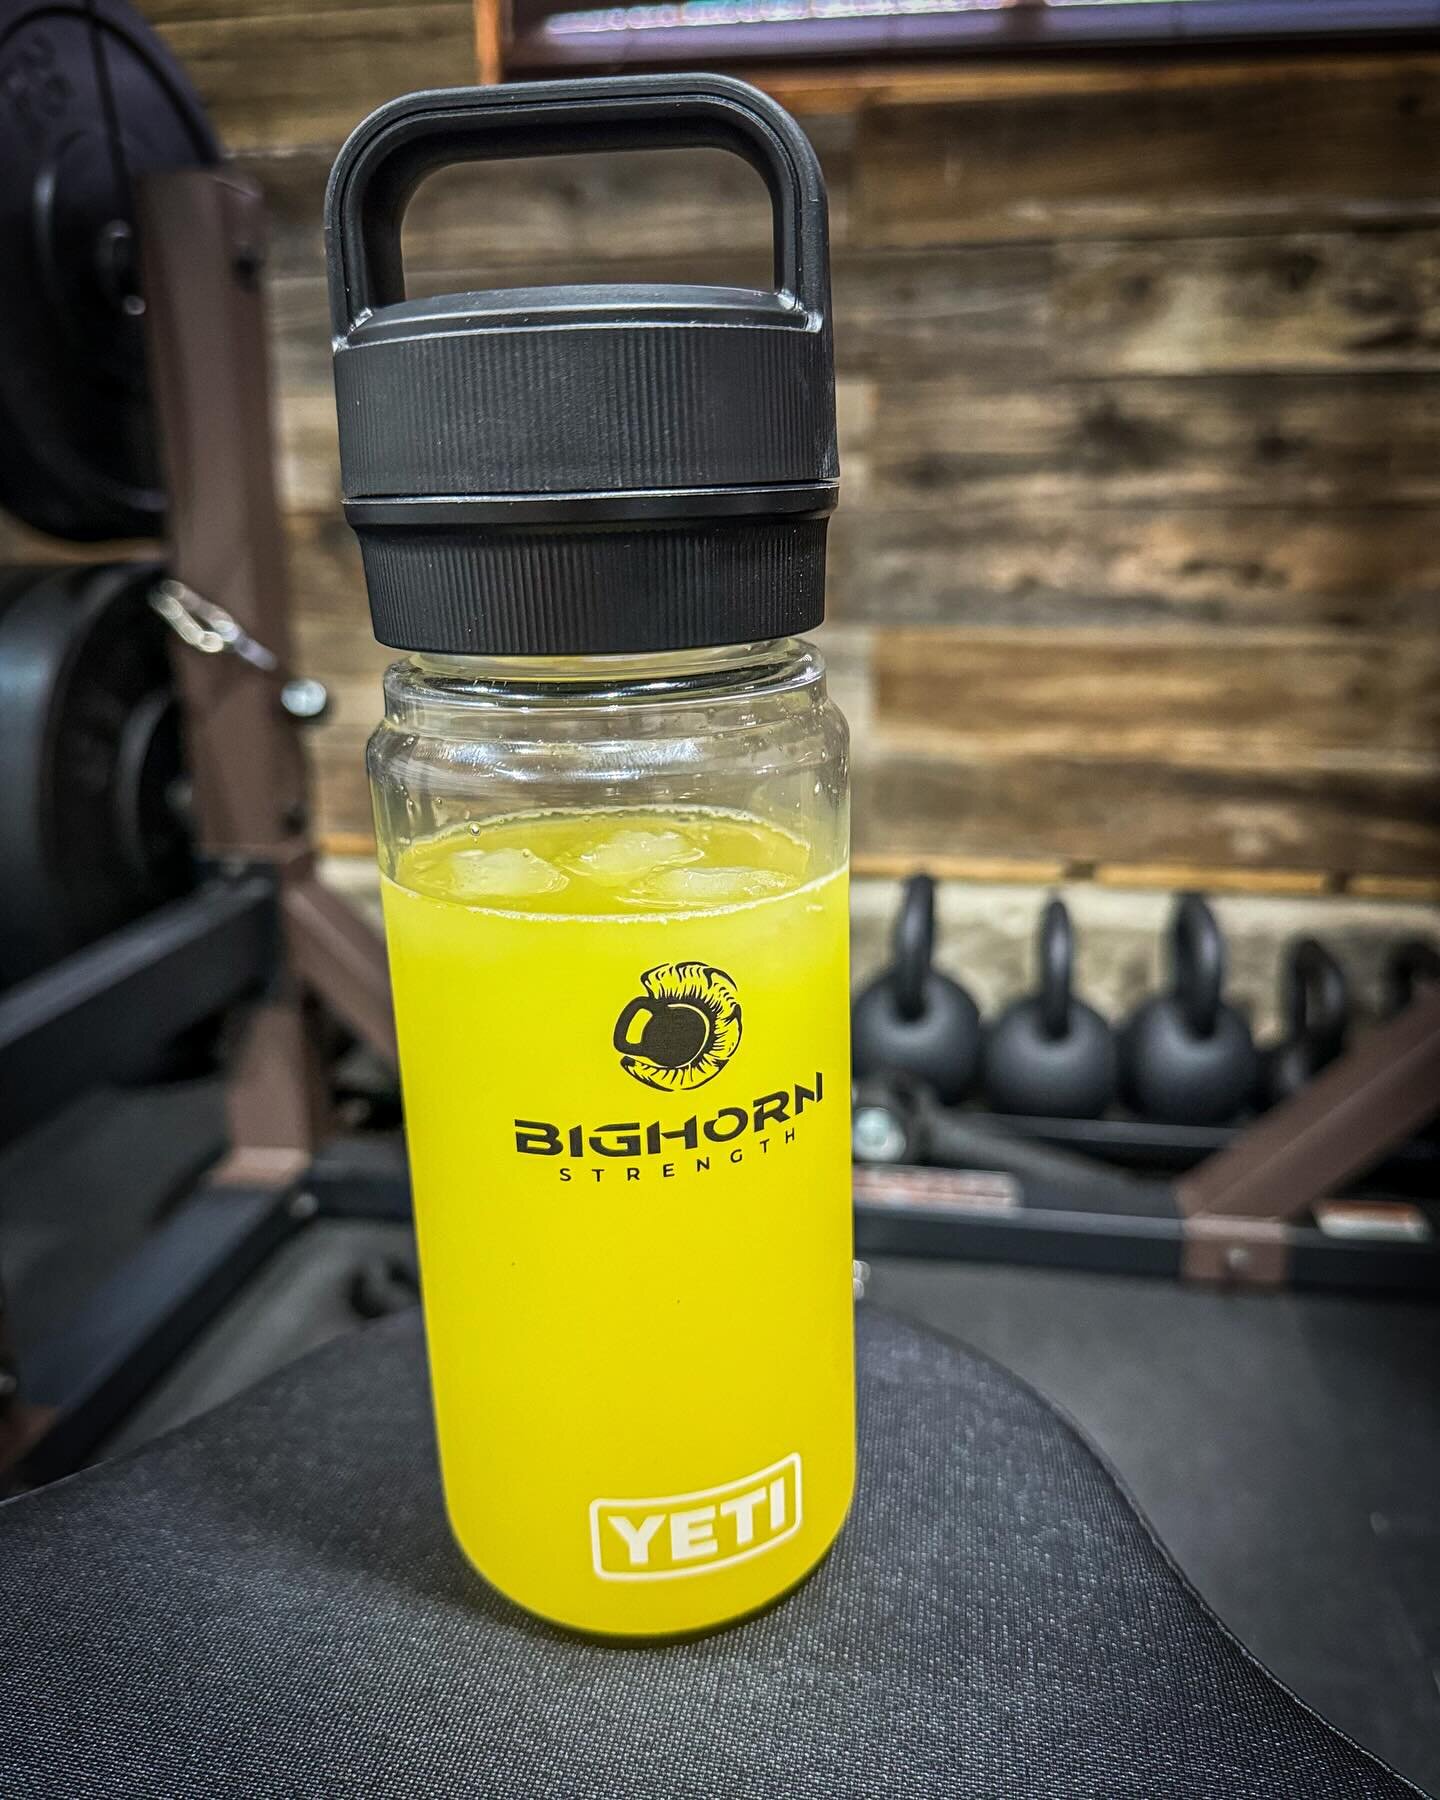 NEW Bighorn YETI Yonder Water Bottles (20 oz.). Available on the website! @yeti 

bighornstrength.com

#bighorn #strength #training #hunting #fitness #brand #trainer #strengthcoach #garagegym #kettlebell #program #nevada #apparel #gymwear